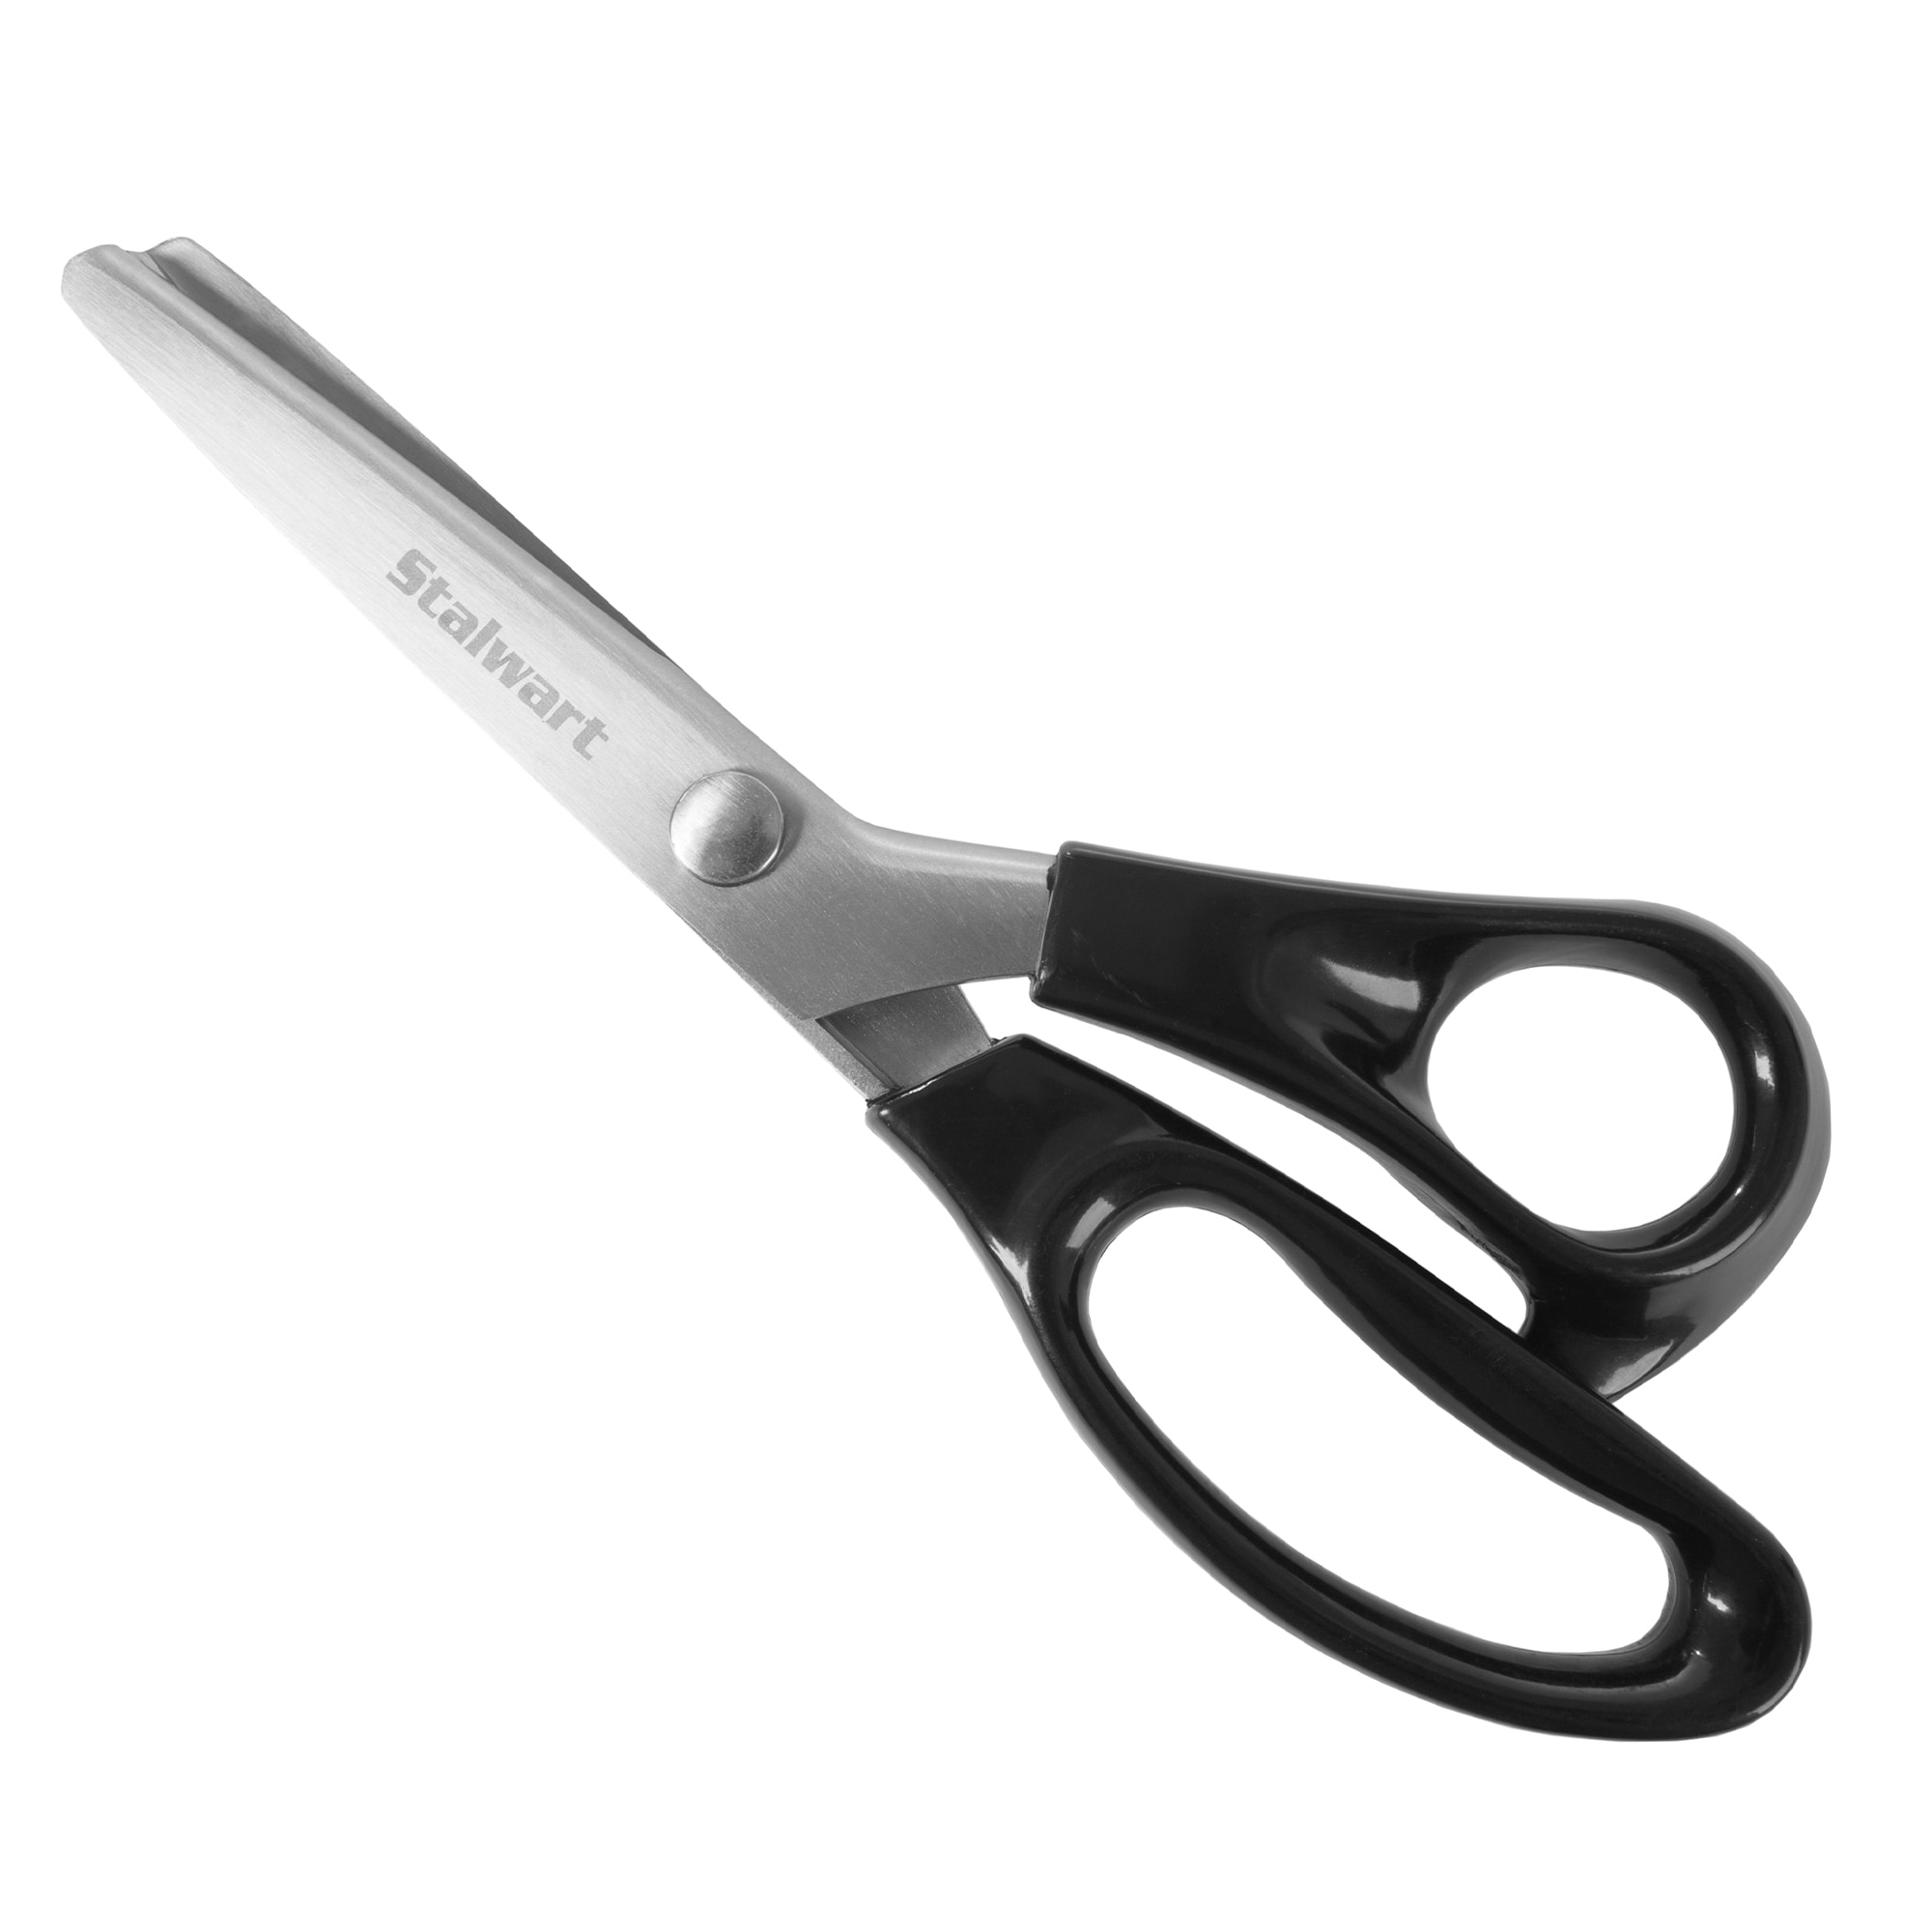 pinking shears scissors